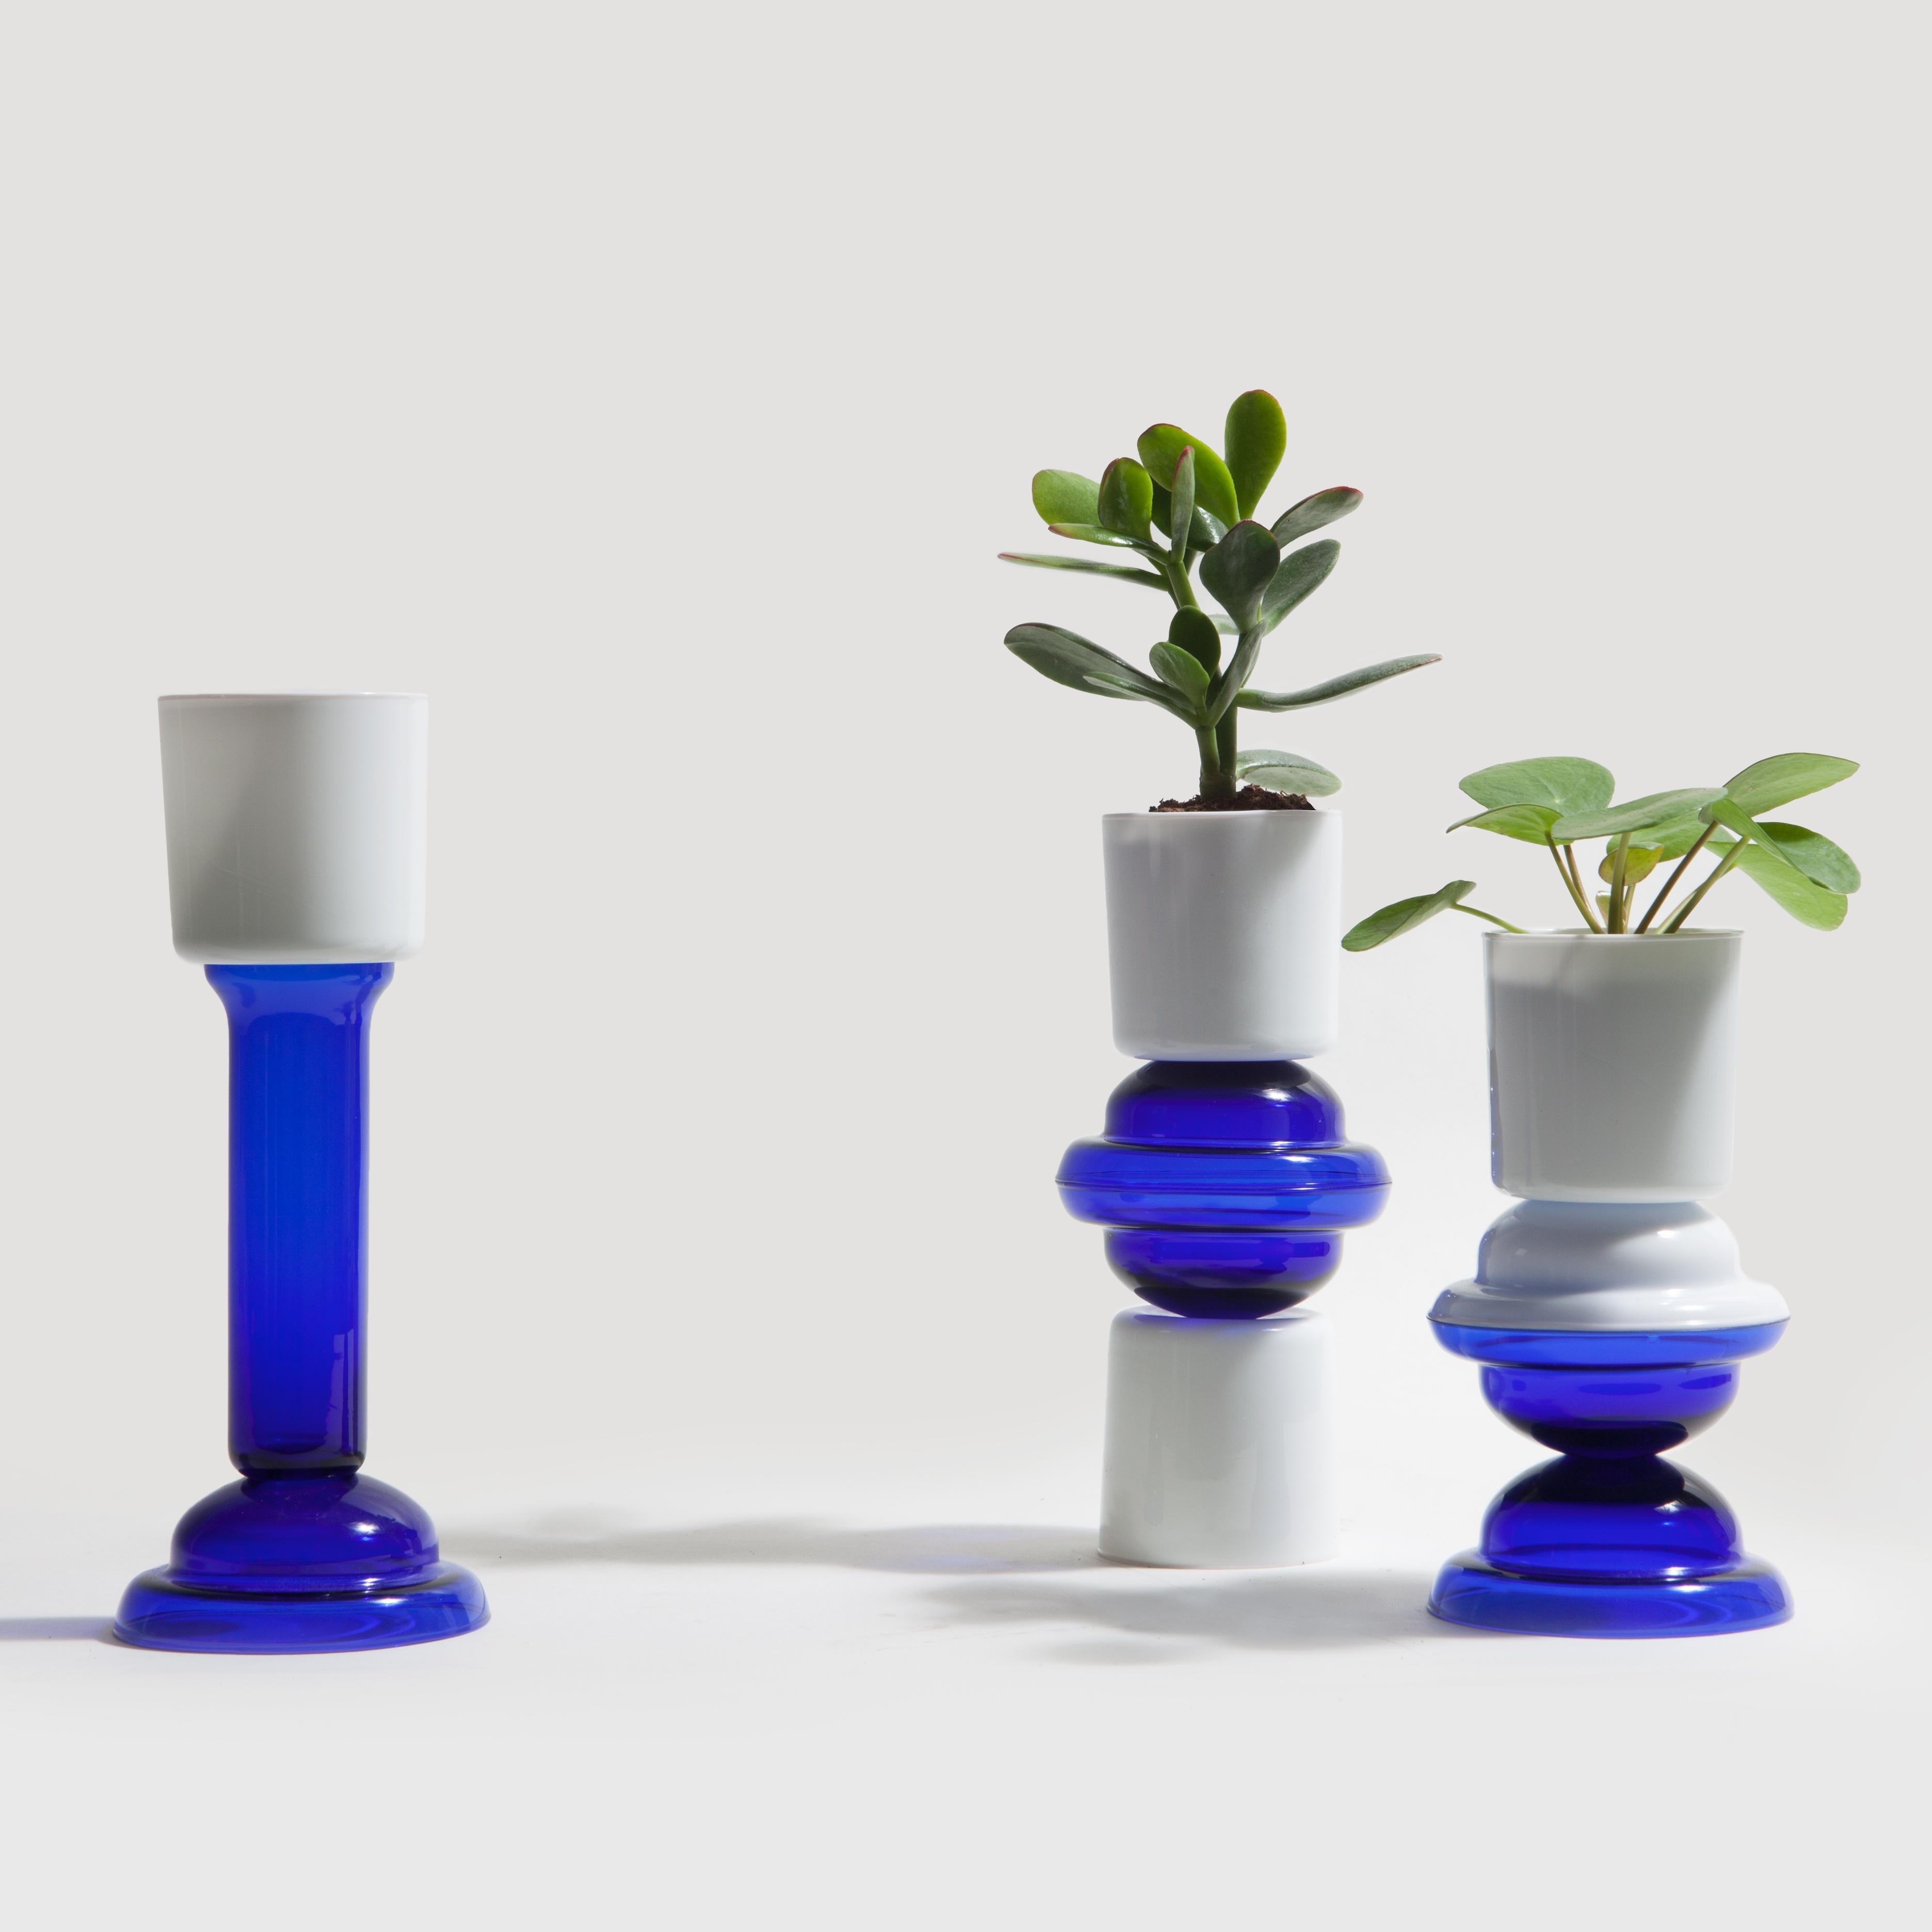 Blue and white glass pieces attached together.
BD Barcelona designed by Mermelada Estudio.